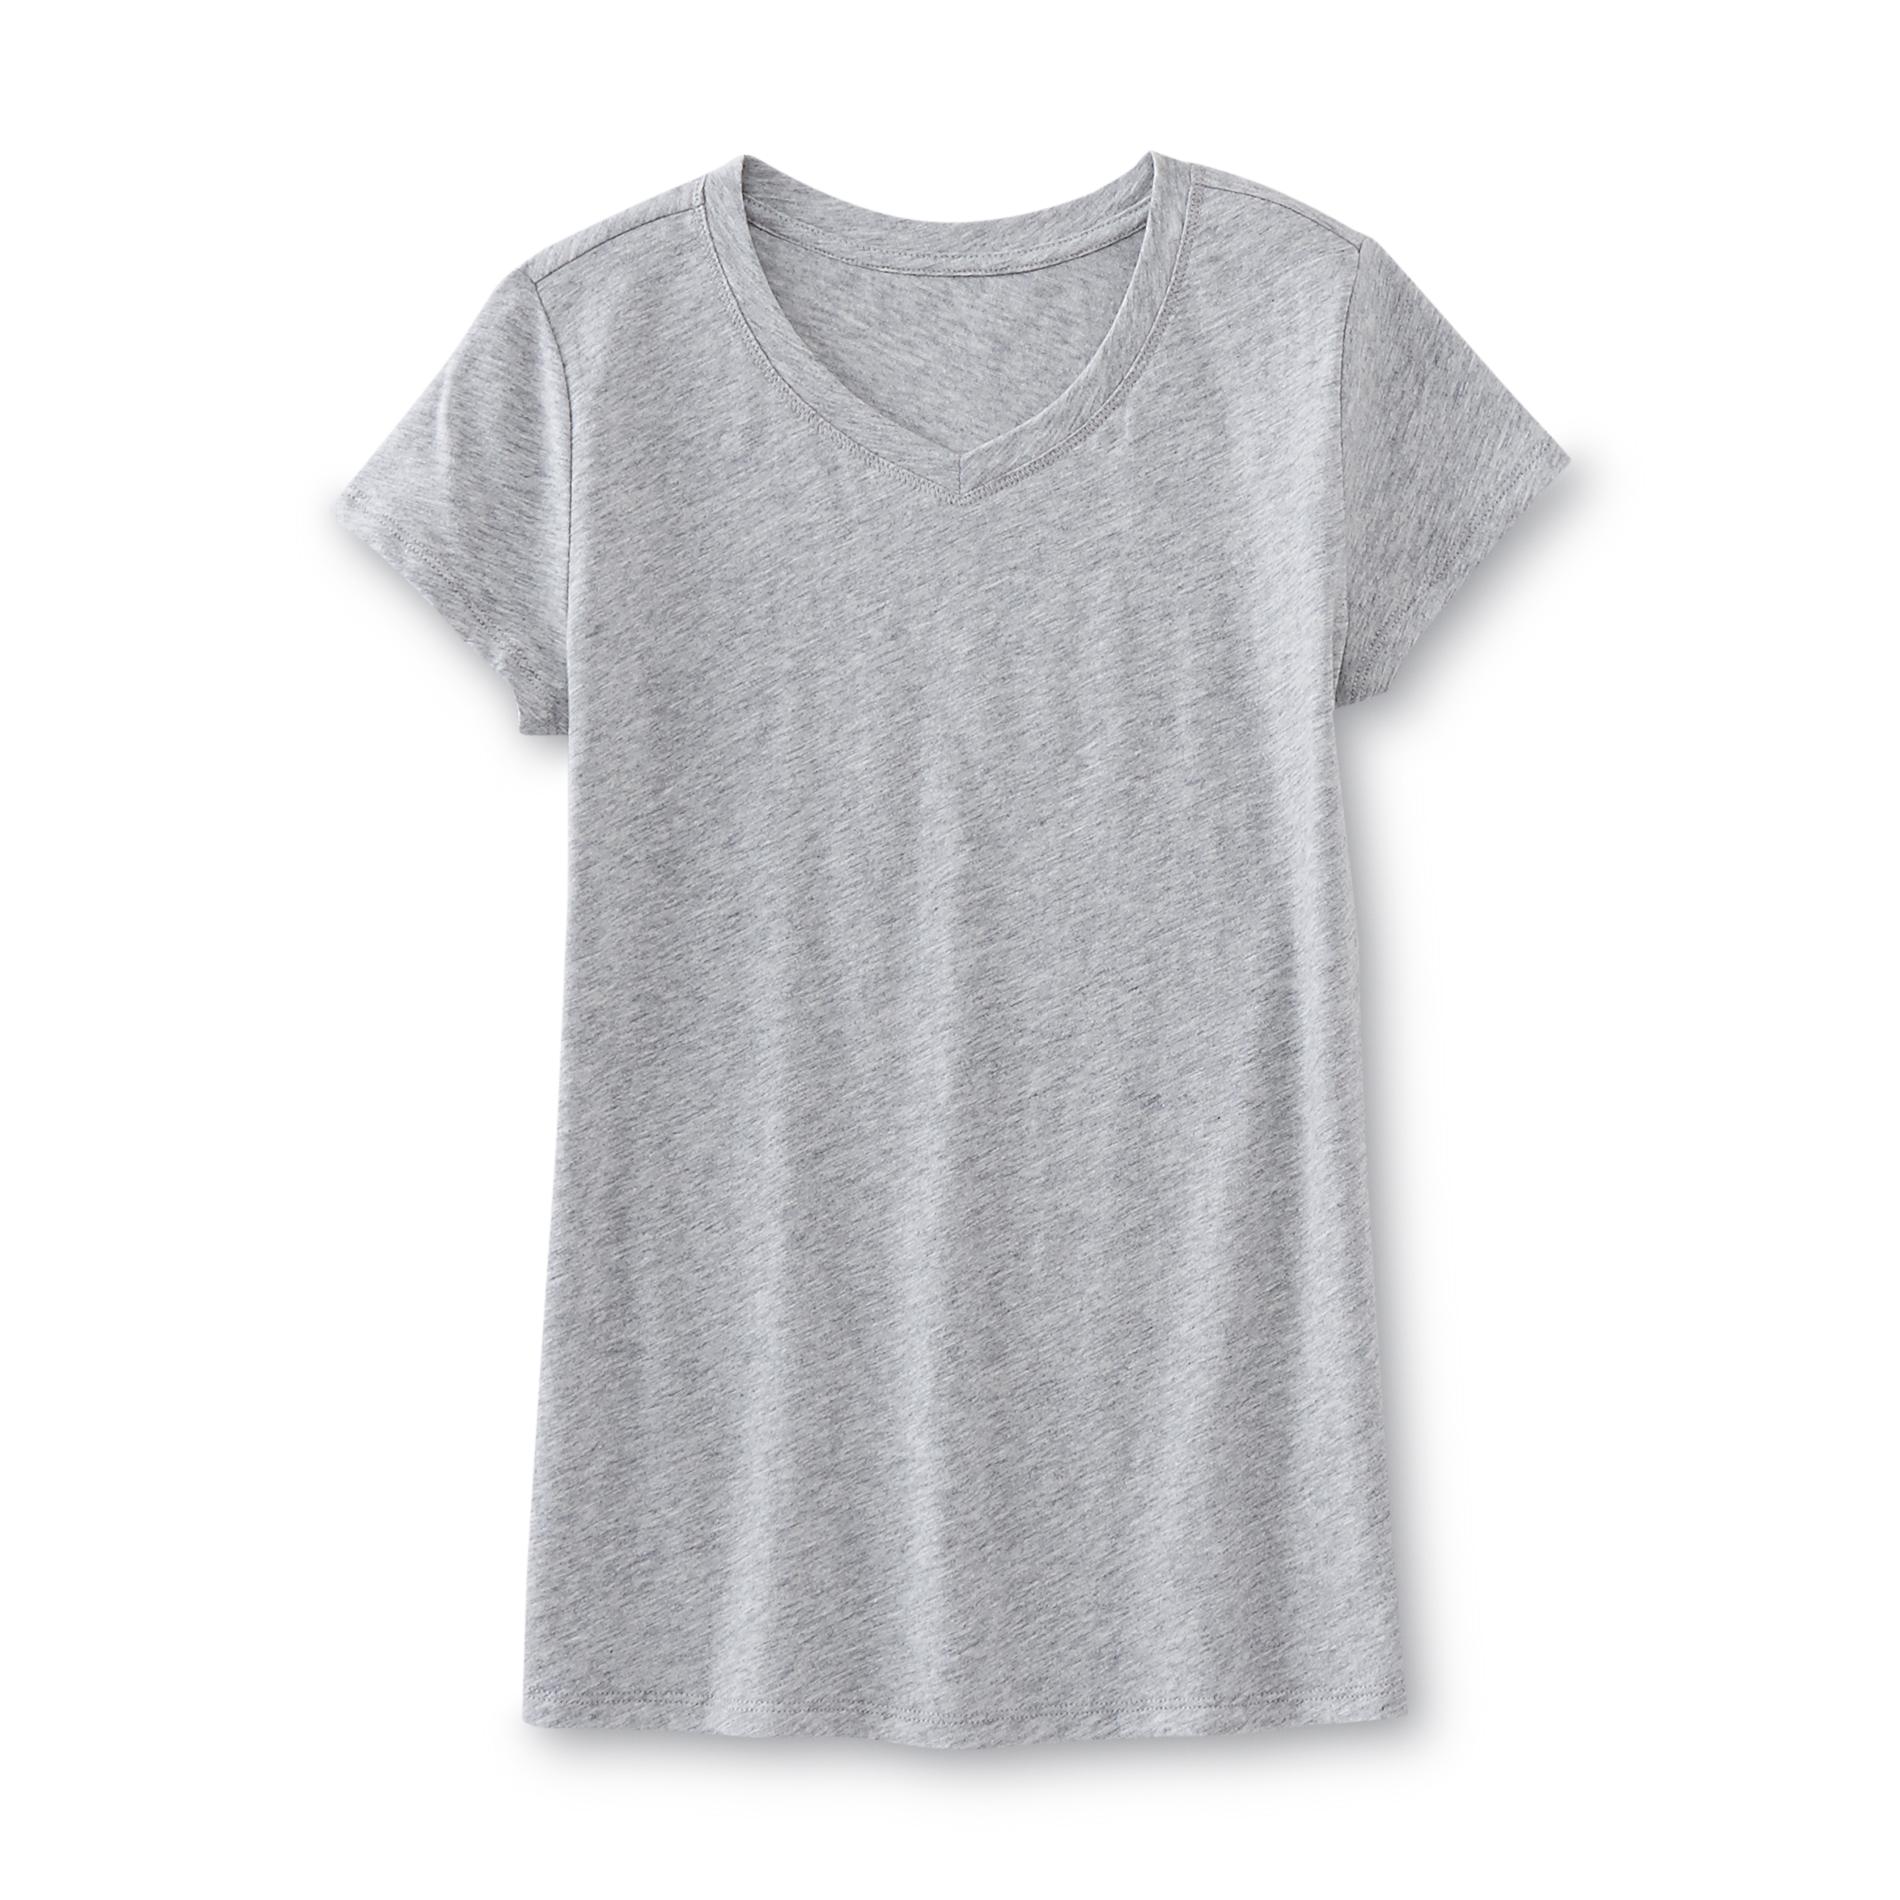 Simply Styled Girl's Slub Knit T-Shirt